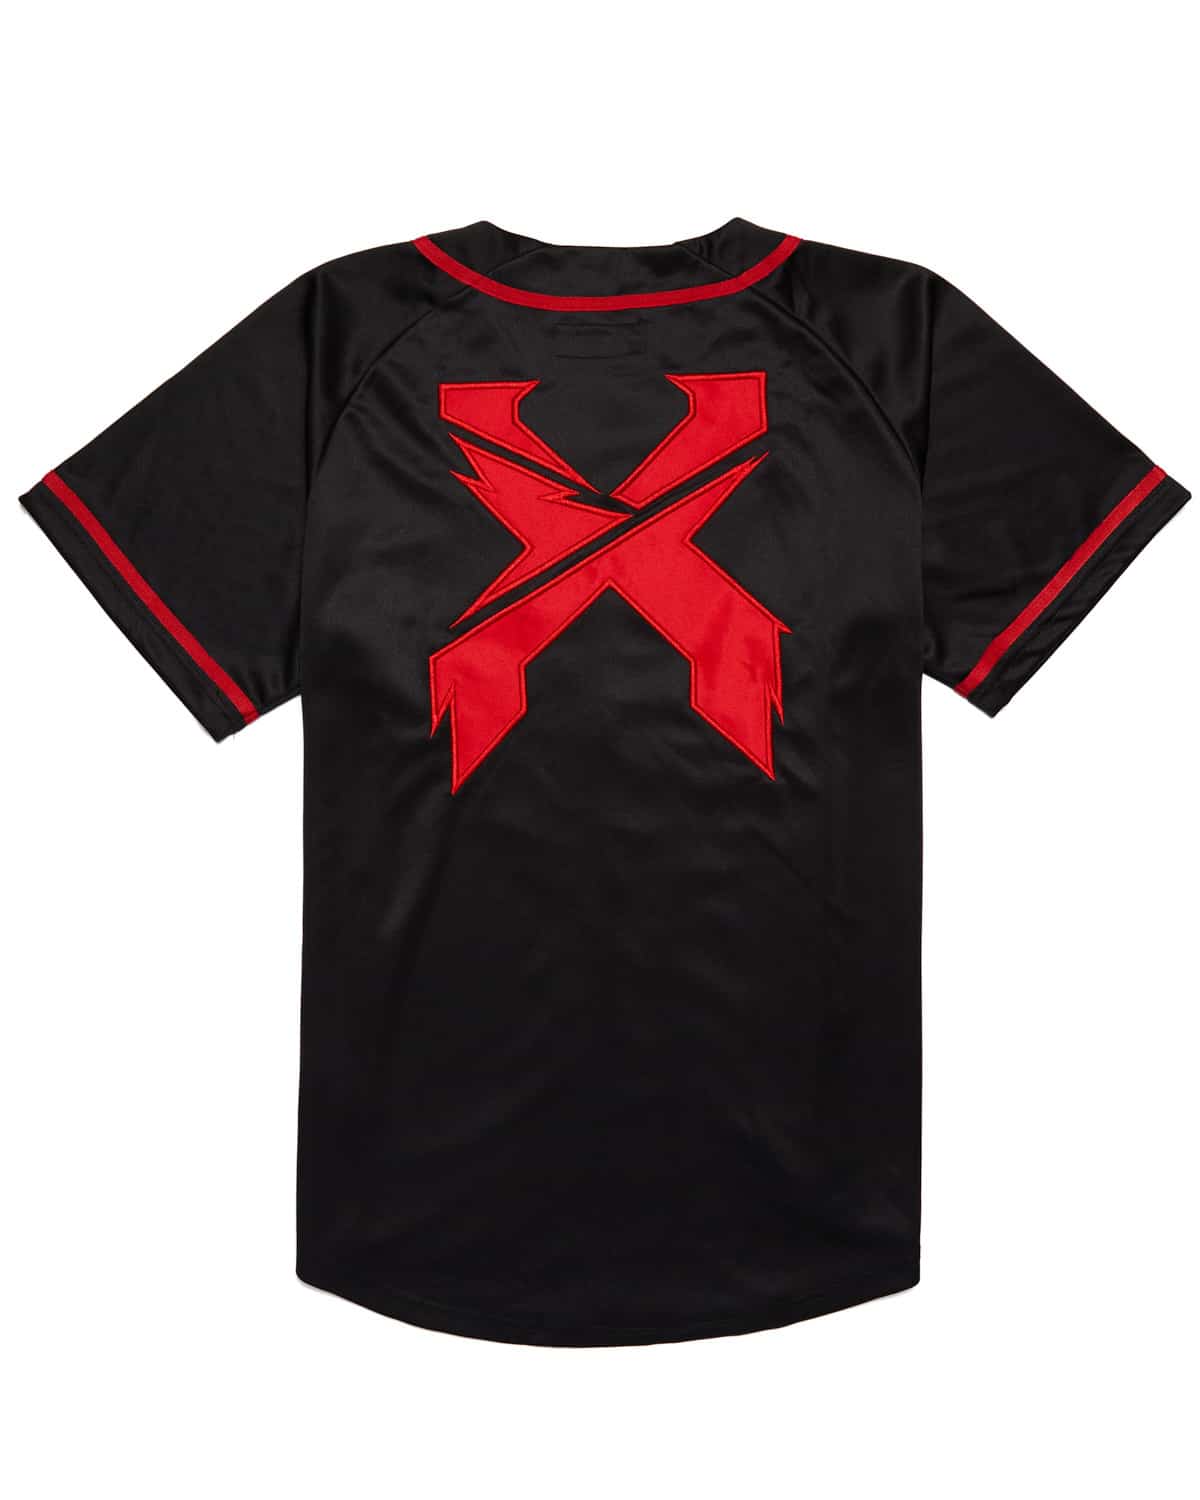 black and red baseball shirt